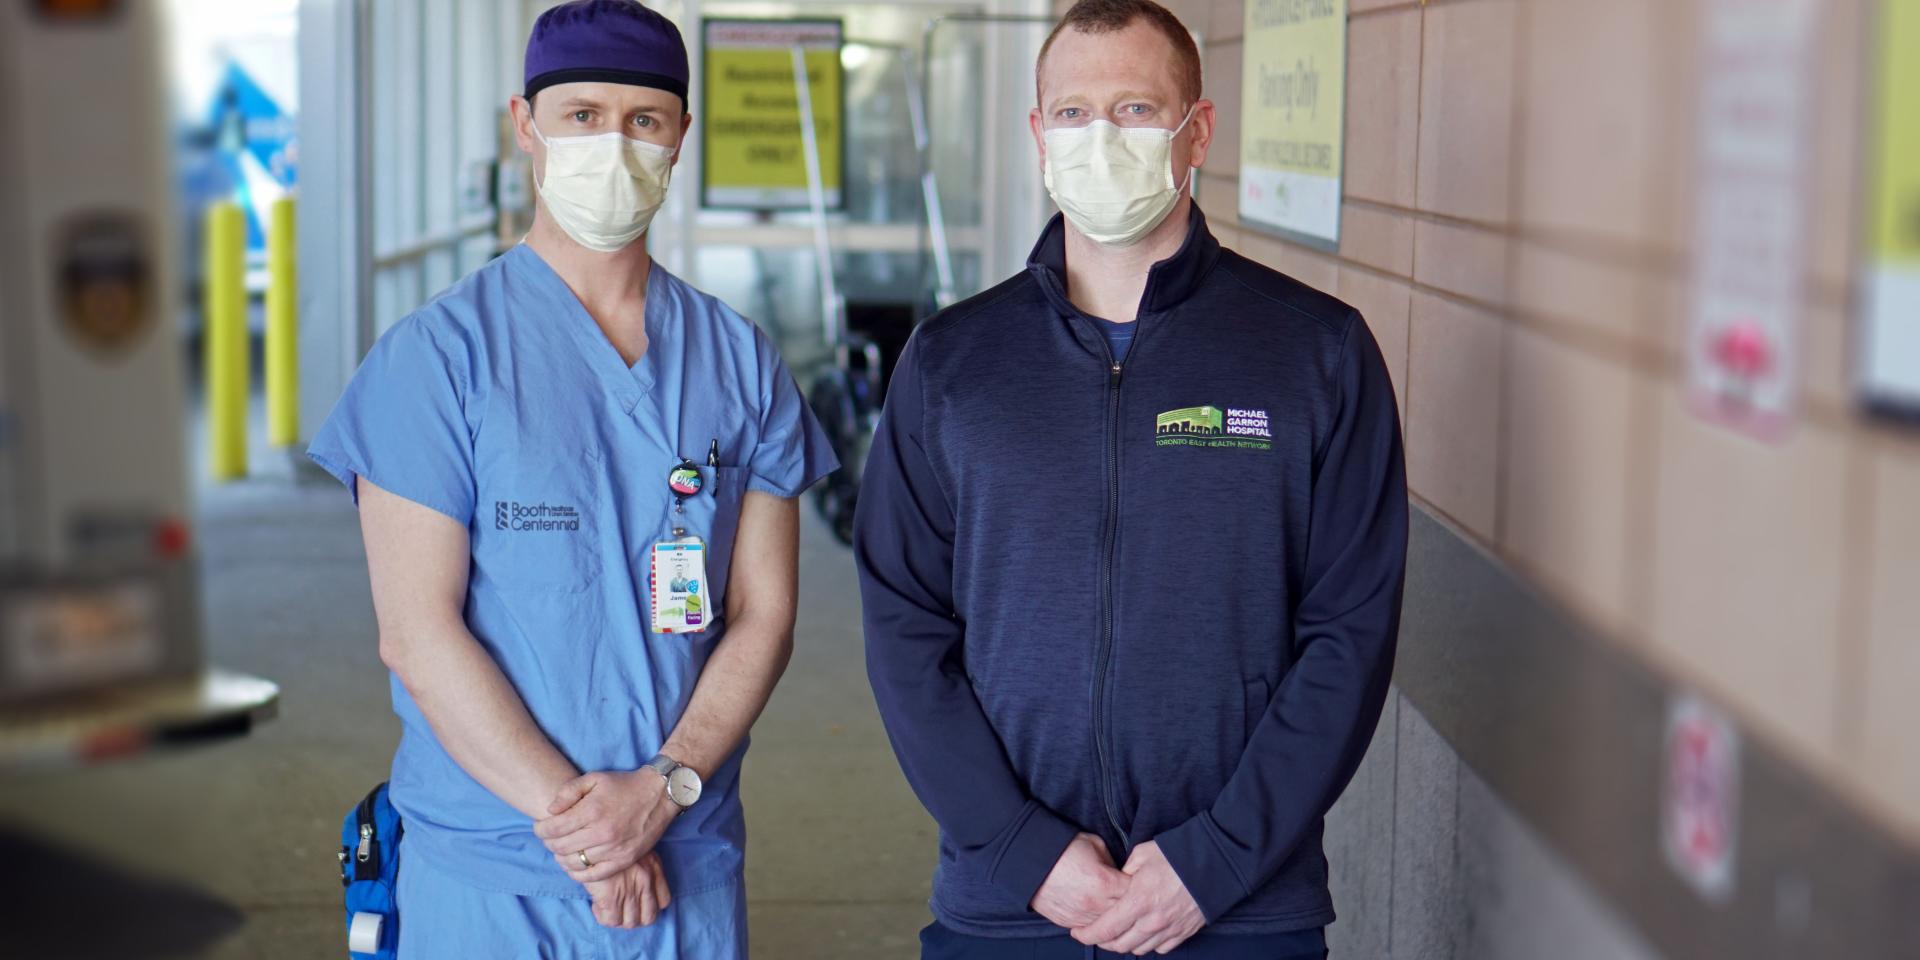 ED nurses with masks standing in hospital corridor